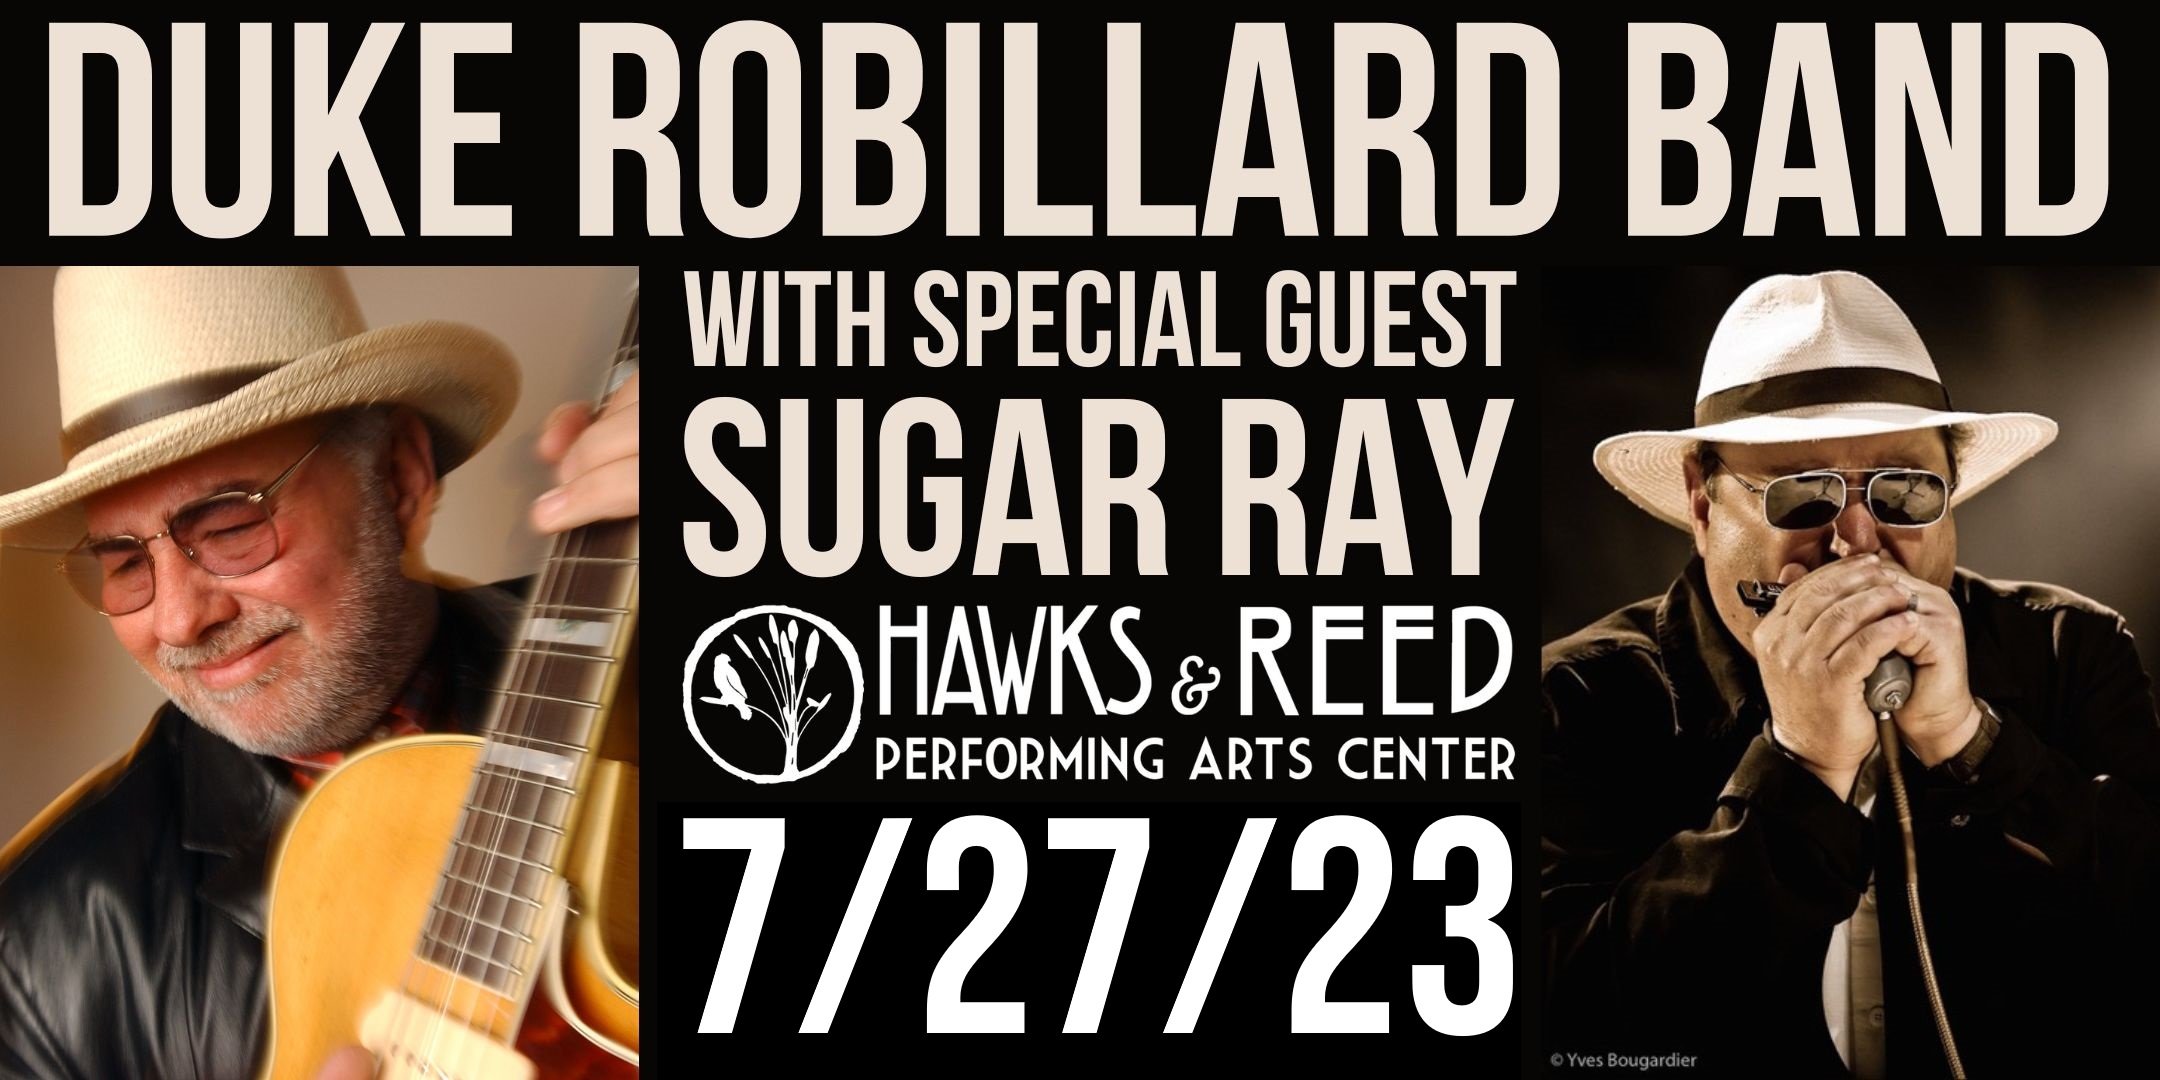 Duke Robillard Band with Special Guest Sugar Ray at Hawks & Reed